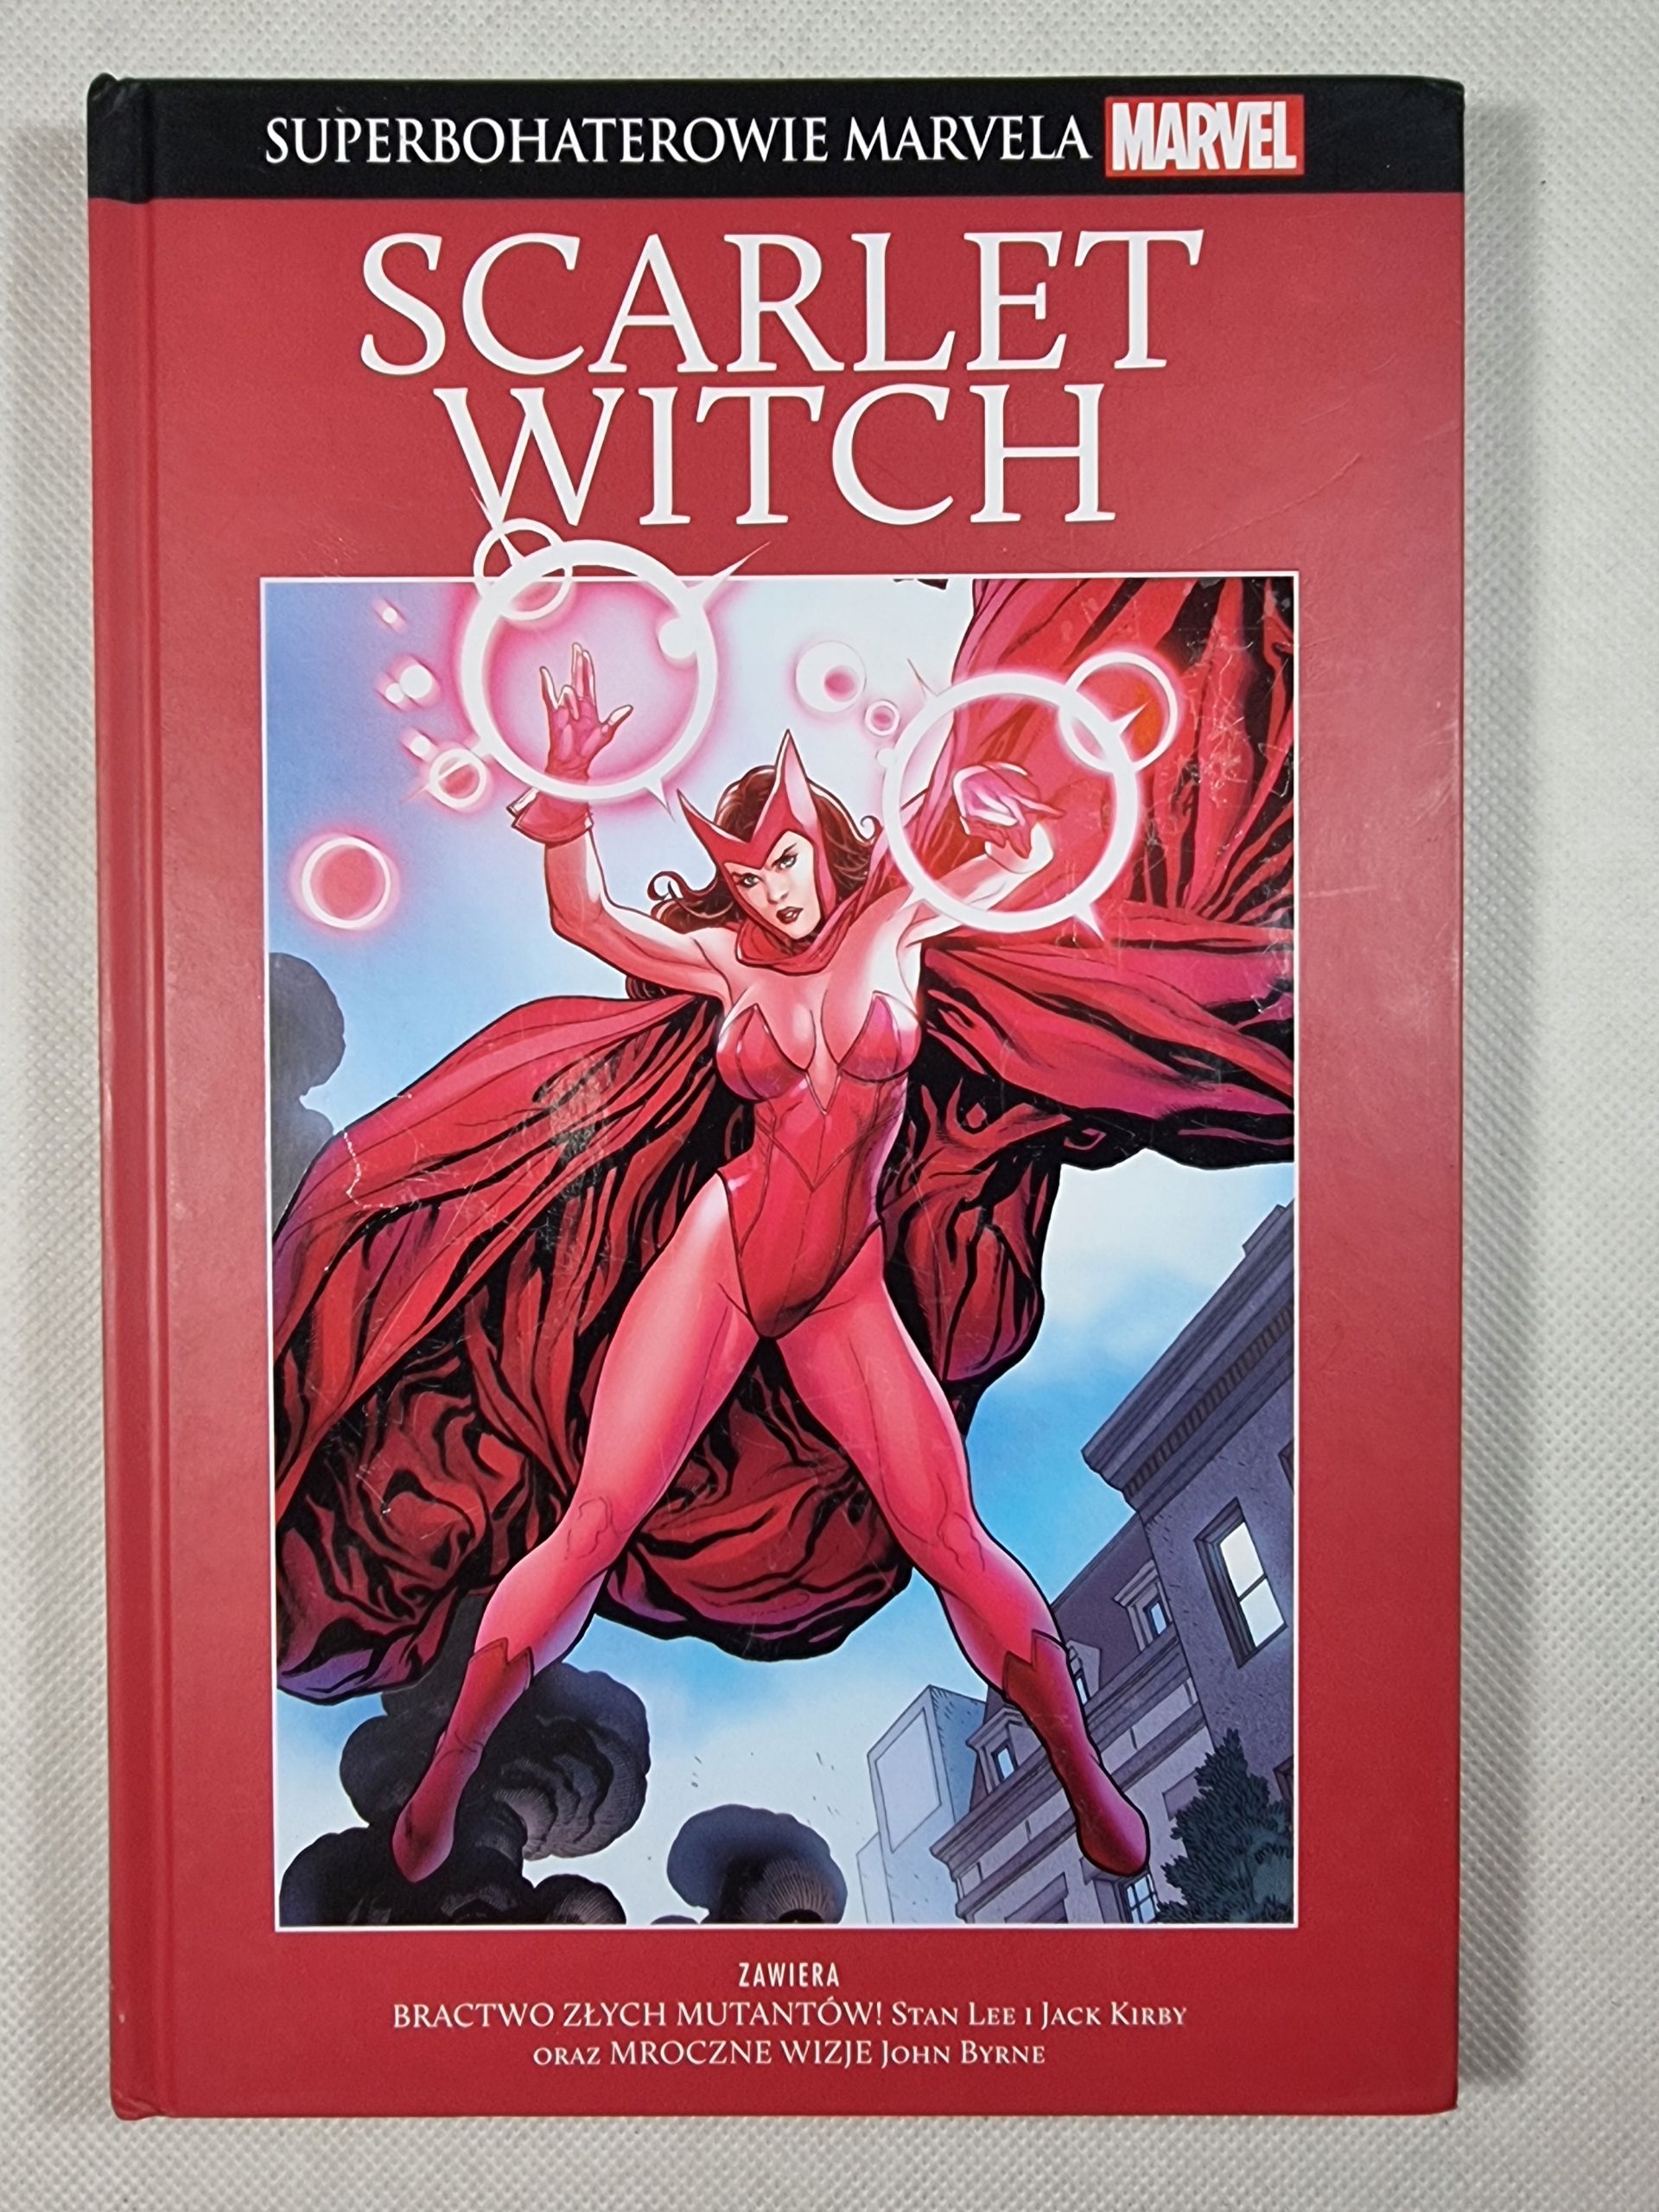 Scarlet Witch / Superbohaterowie Marvela Tom 26 / Kolekcja Hachette